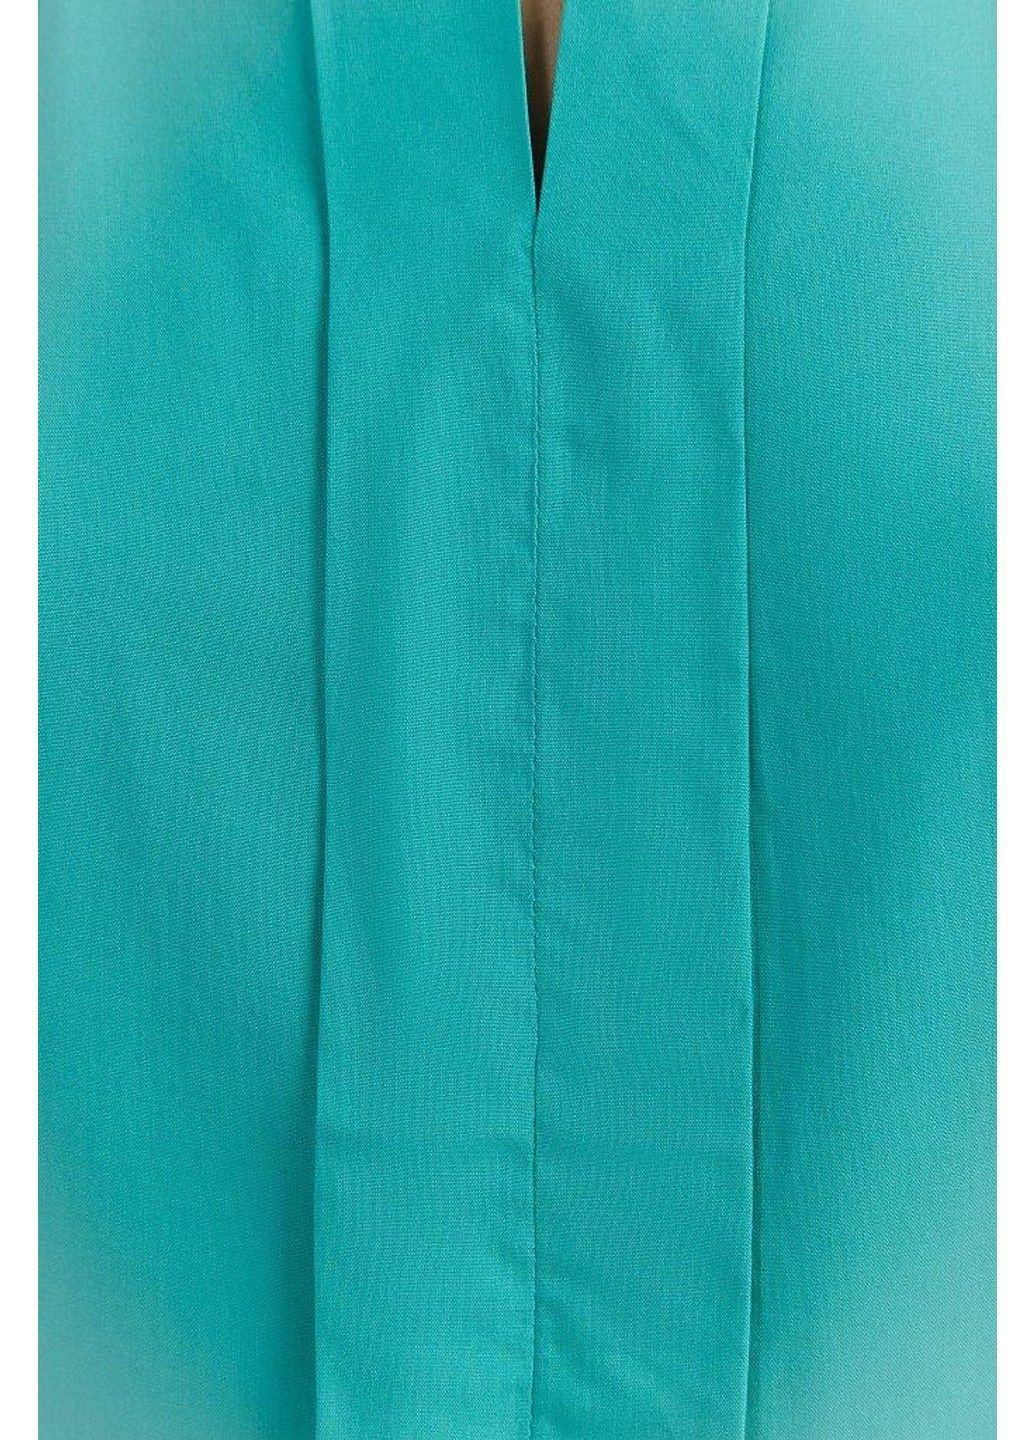 Бірюзова блузка s19-11099-502 Finn Flare